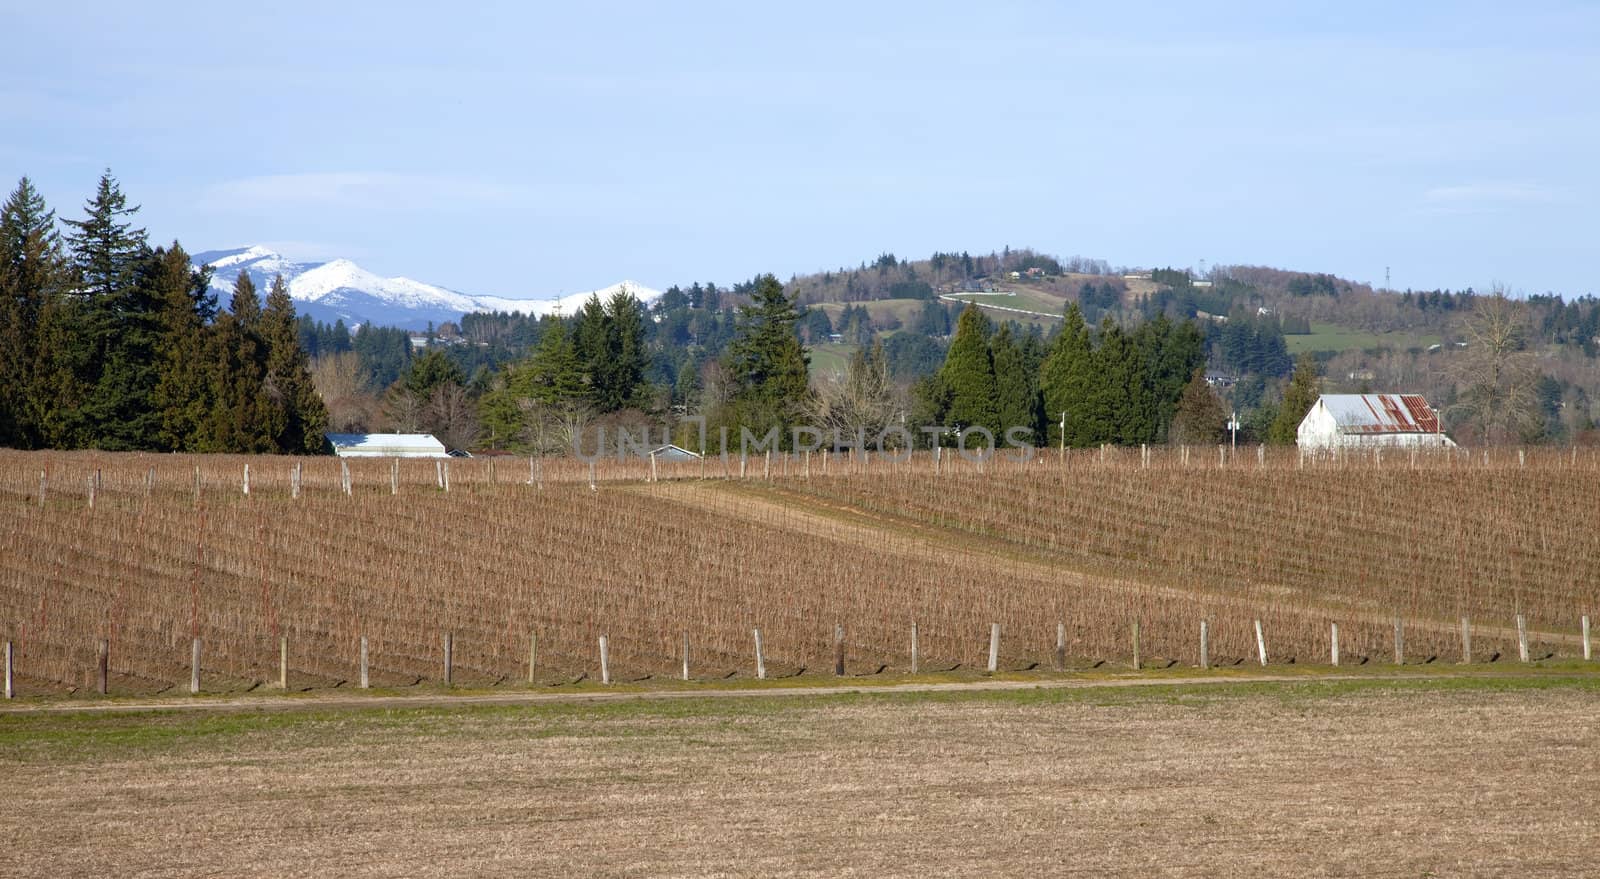 Rural Oregon raspberry field farms.